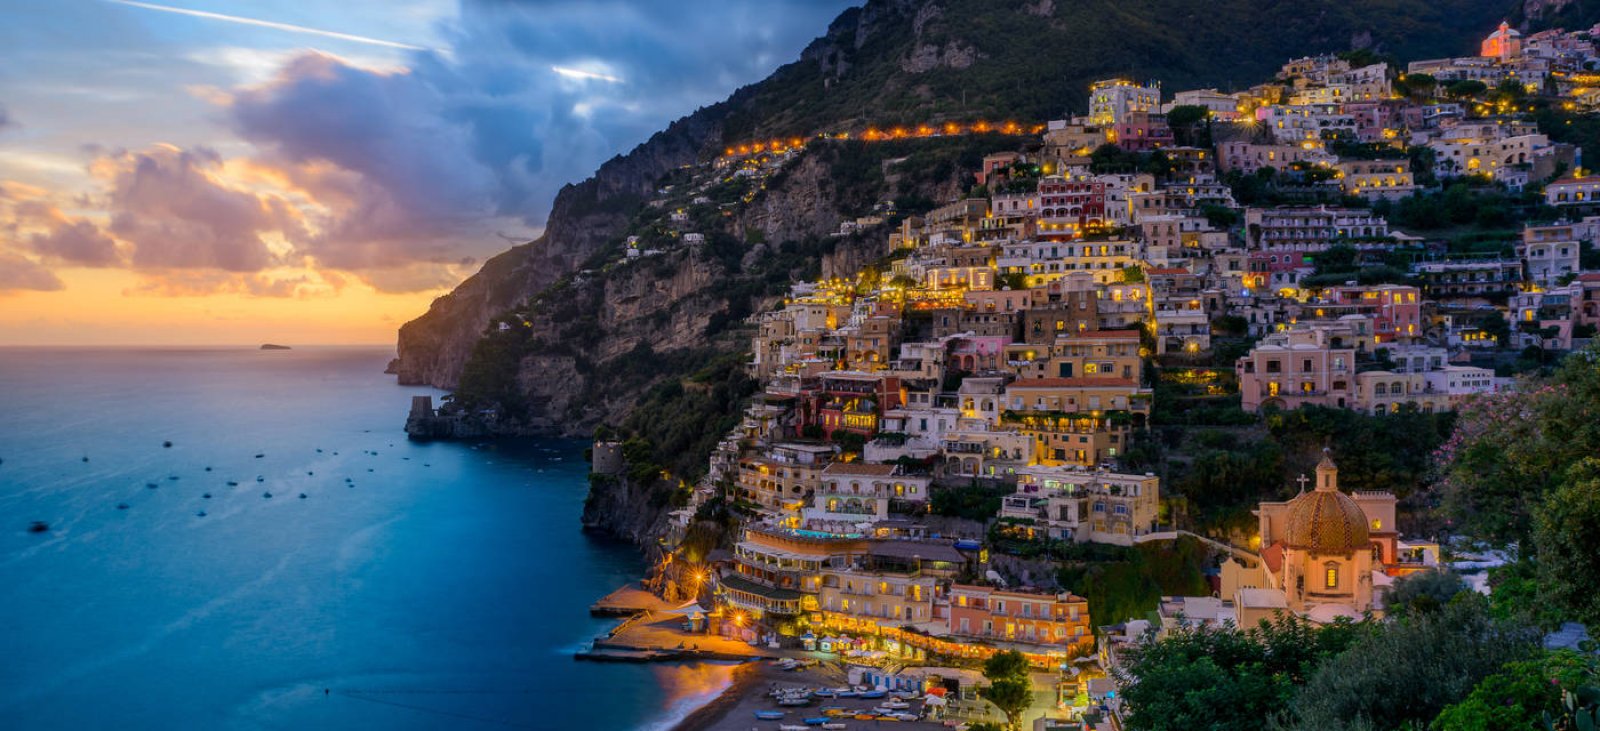 Capri, Ischia and the Sorrentine Peninsula